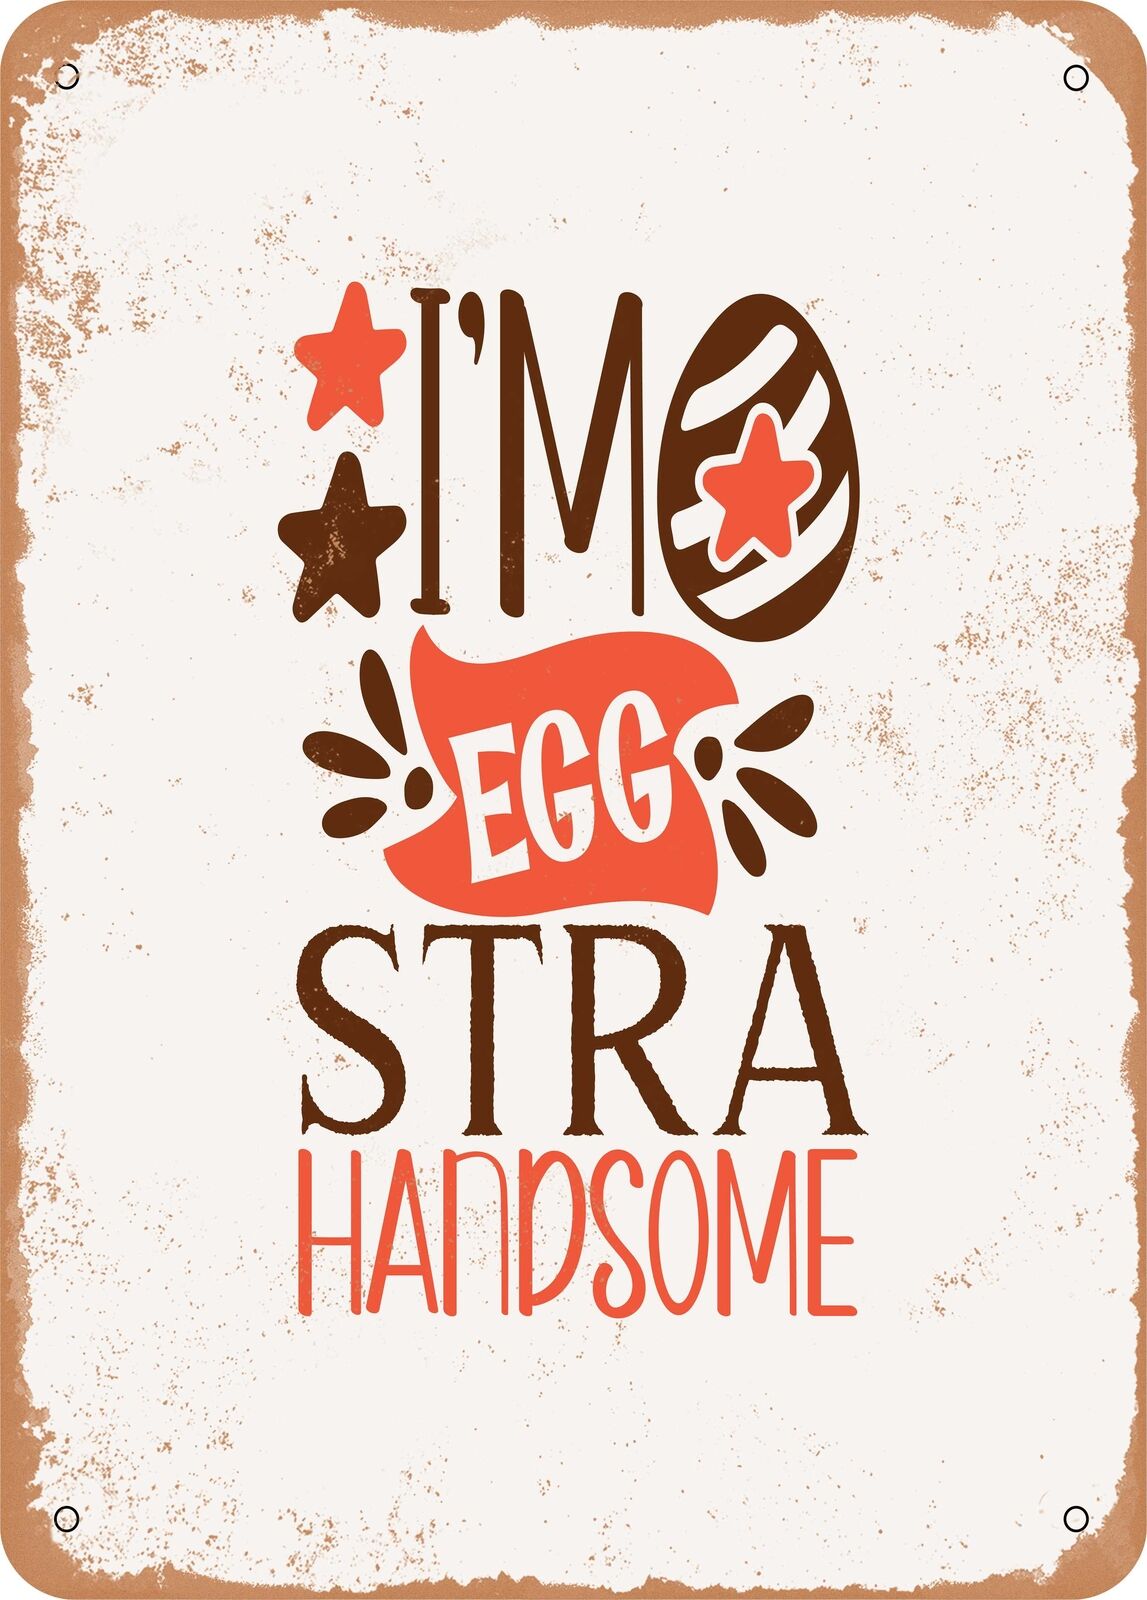 Metal Sign - I\'m Eggstra Handsome - Vintage Rusty Look